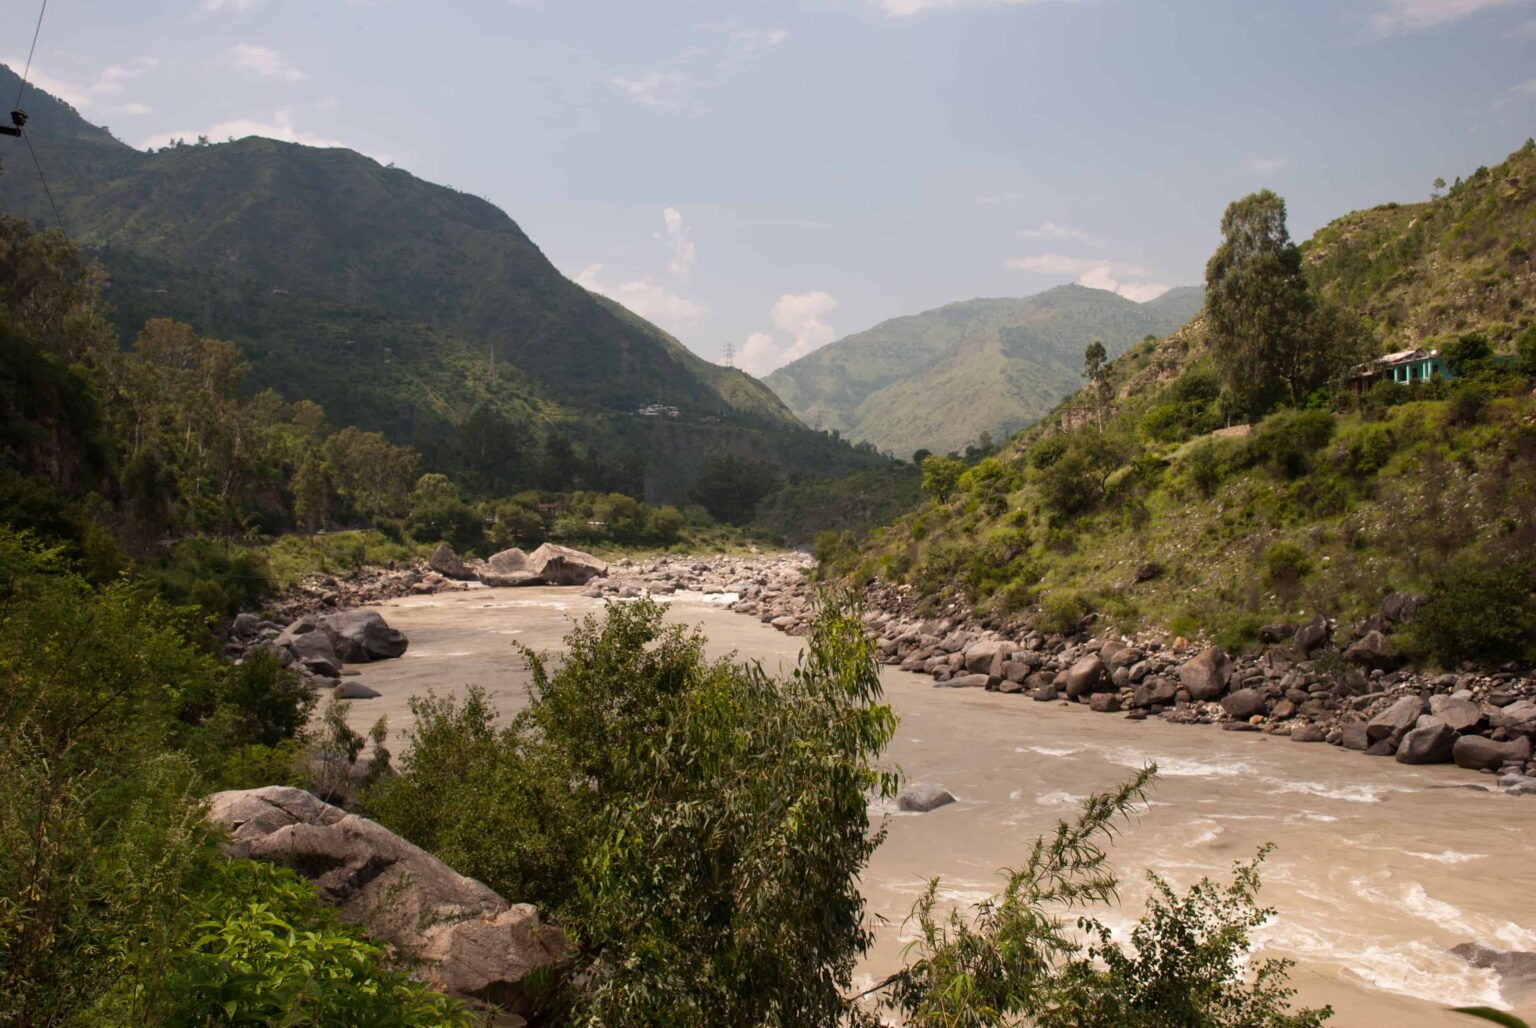 Sutlej River - On the way to Kalpa